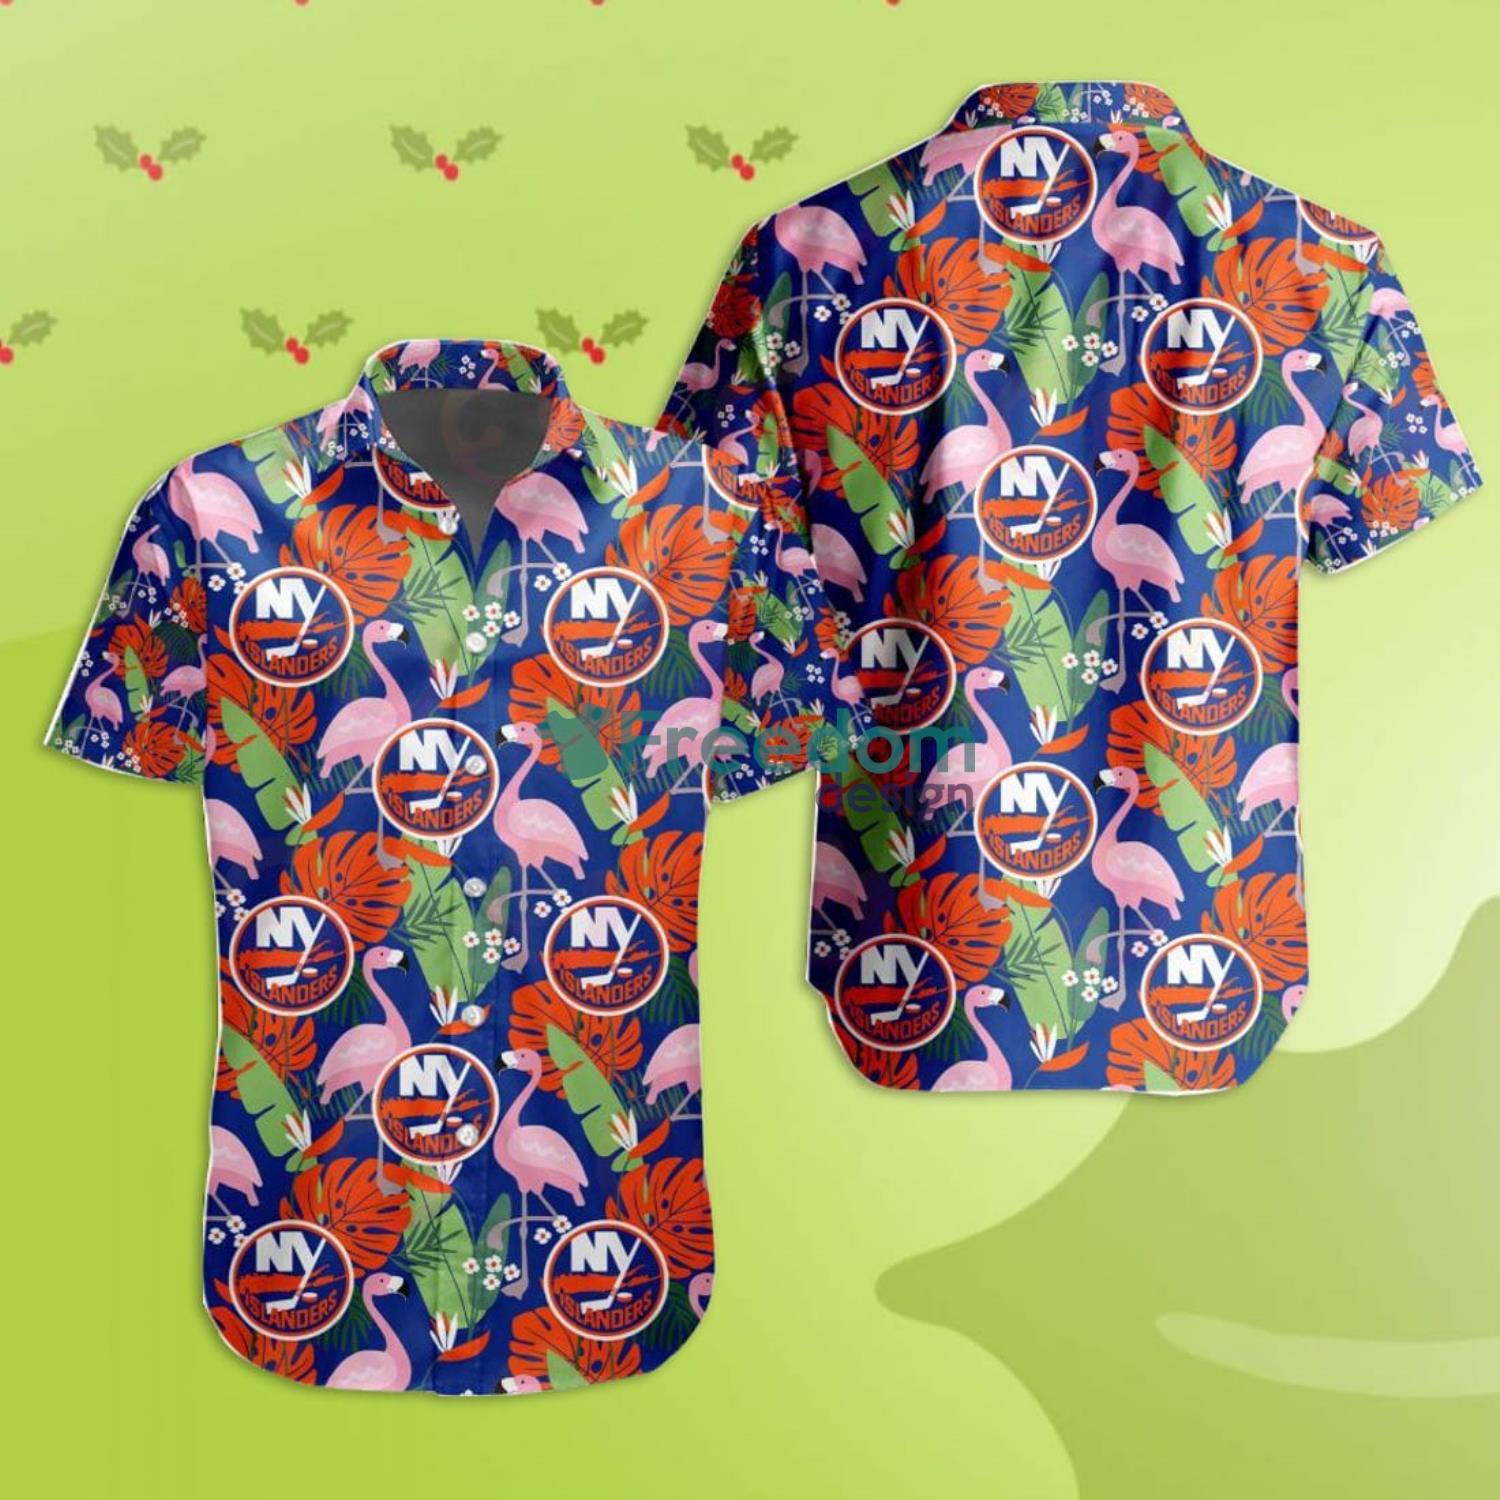 New Jersey Devils NHL Hawaiian Shirt For Men Women Fans - Freedomdesign